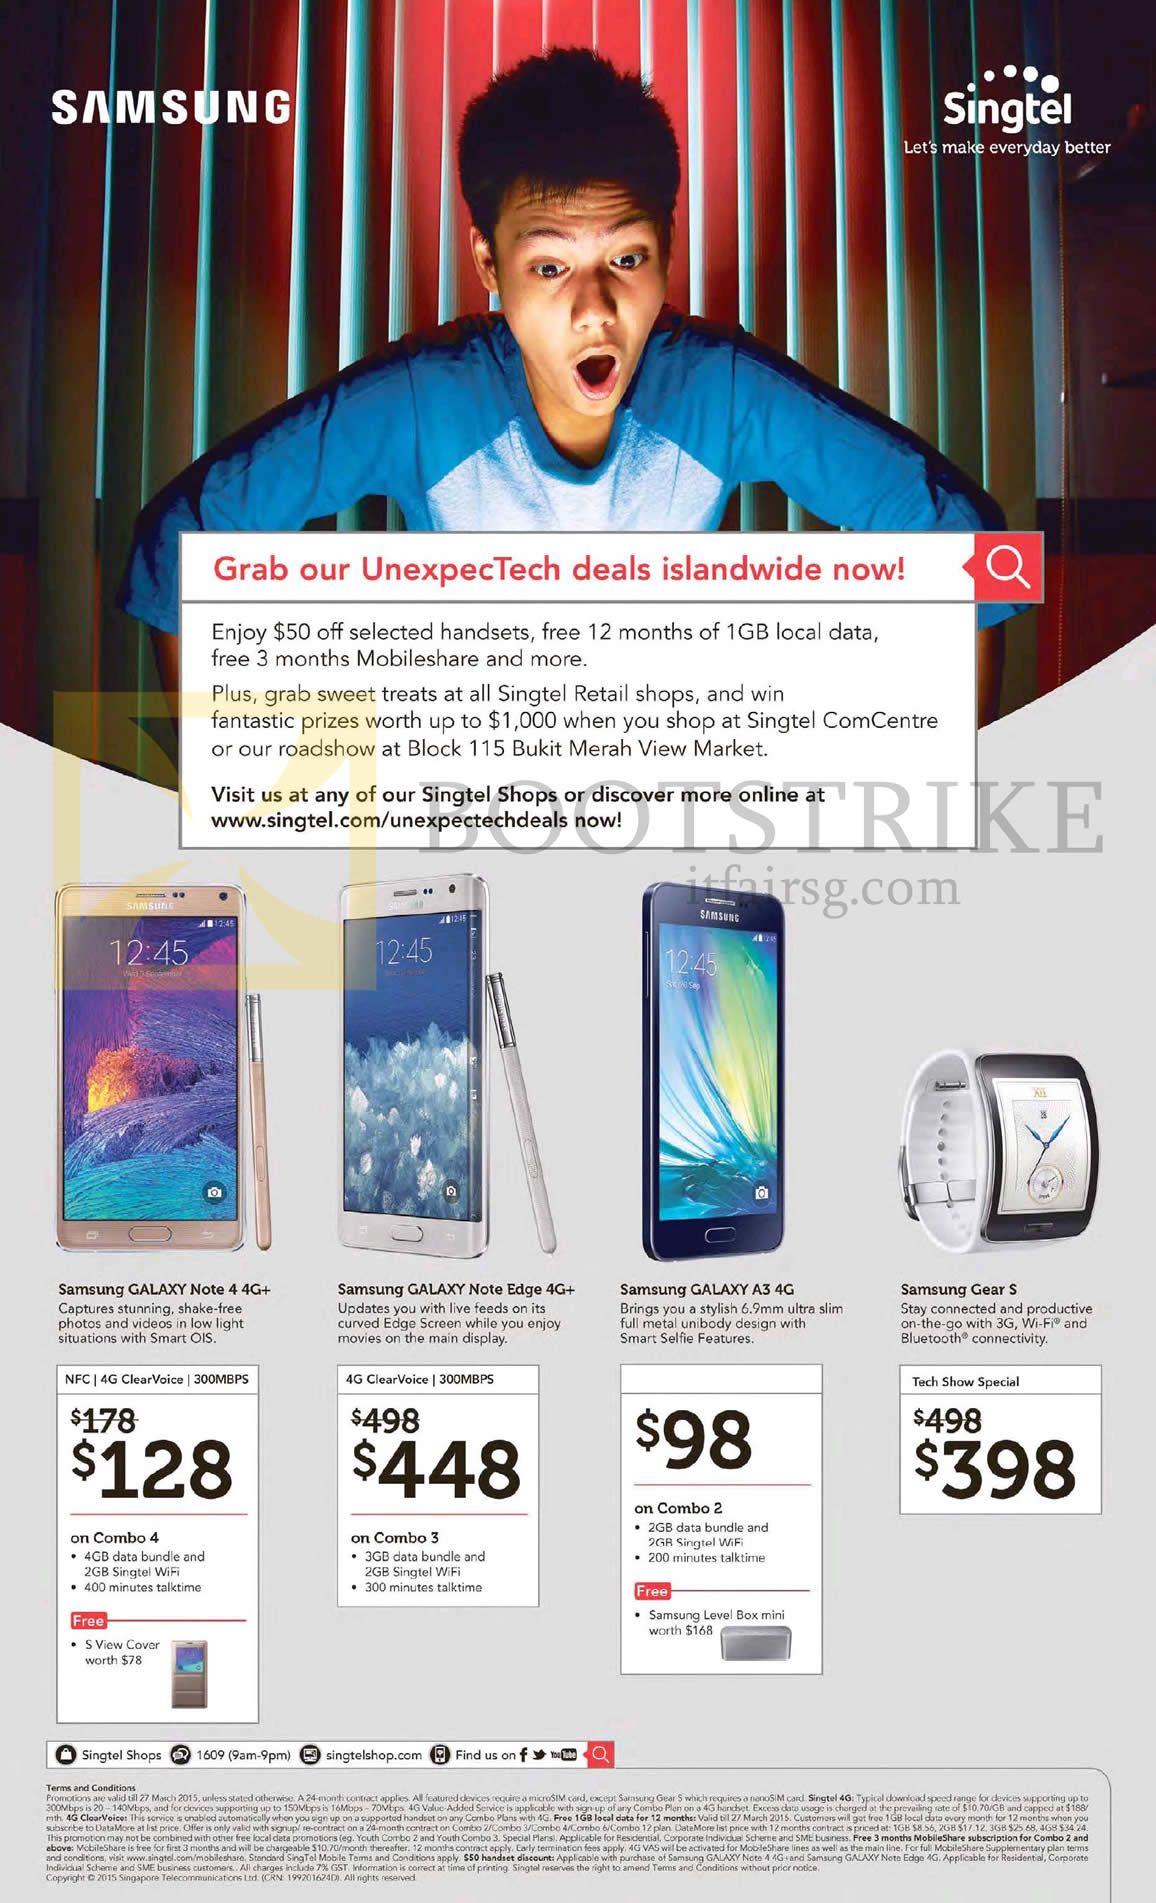 IT SHOW 2015 price list image brochure of Singtel Mobile Phones Samsung Galaxy Note 4, Samsung Galaxy Note Edge, Samsung Galaxy A3, Samsung Galaxy Gear S